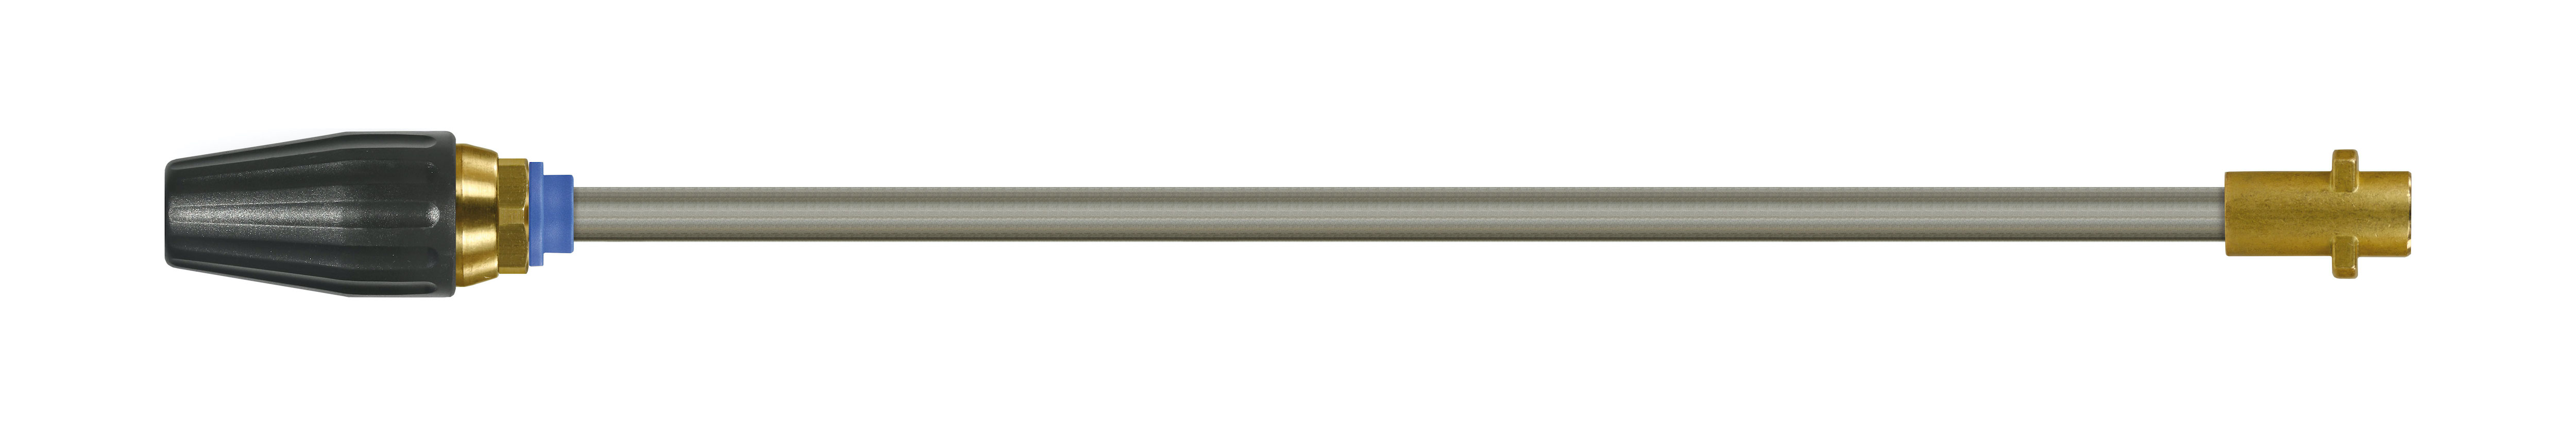 Rotabuse céramique avec lance 430mm, 100-250 bar, Calibre 060.